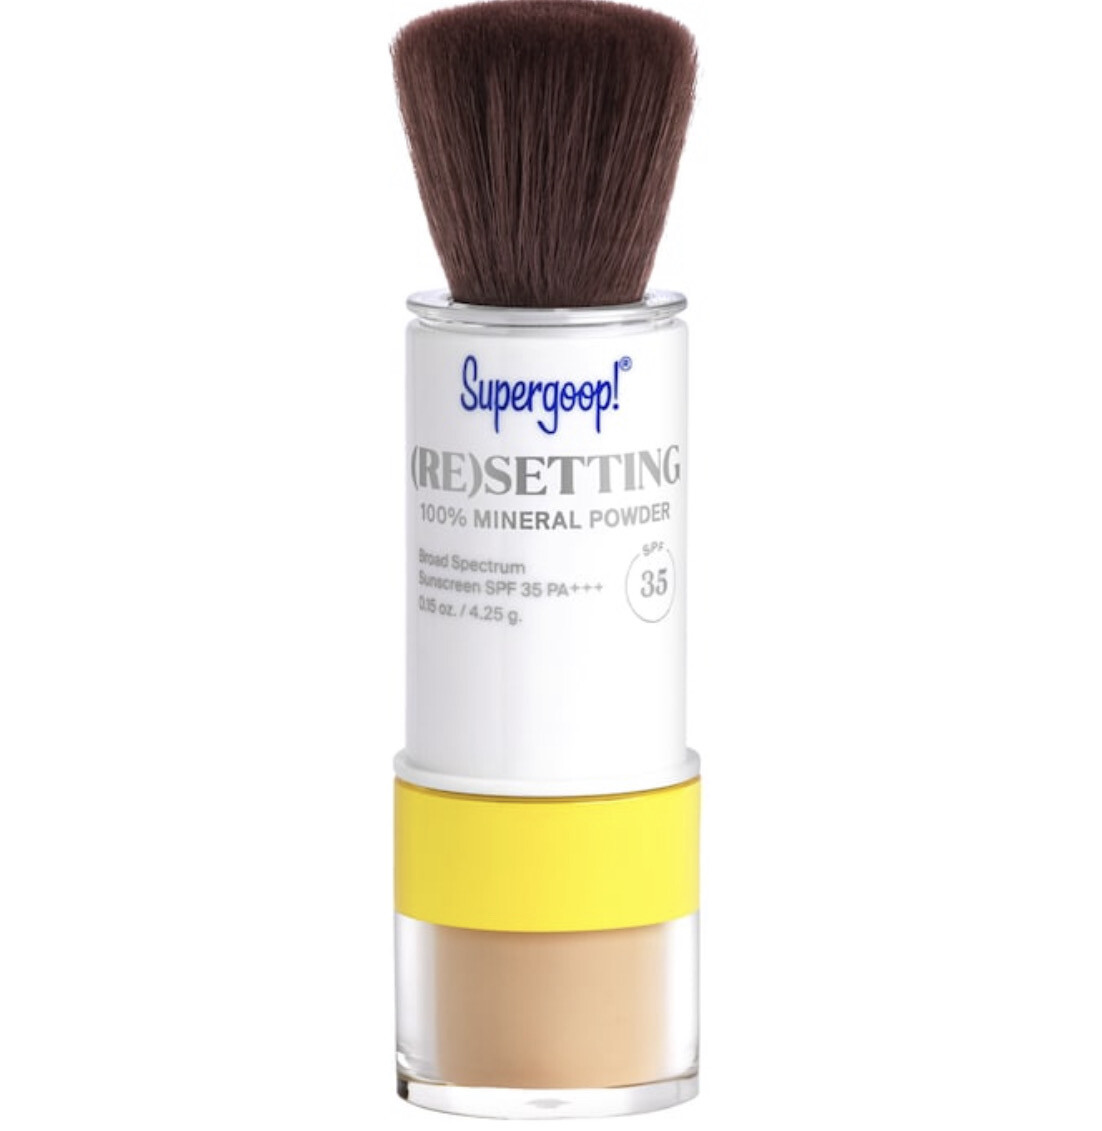 Supergoop! - (Re)setting 100% Mineral Powder Sunscreen SPF 35 PA+++ | Medium